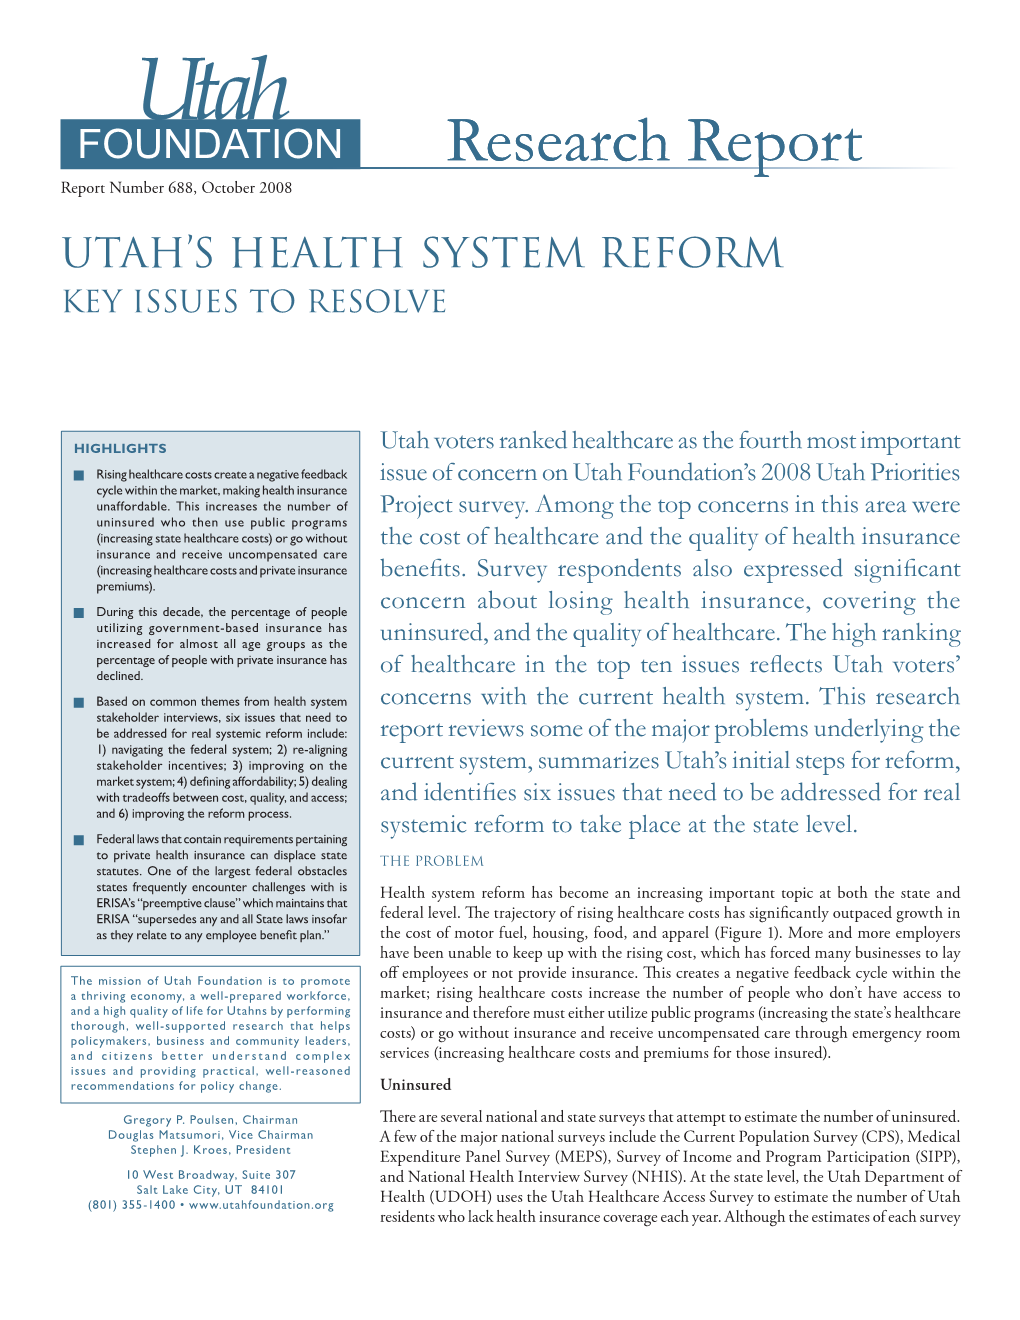 Utah's Health System Reform